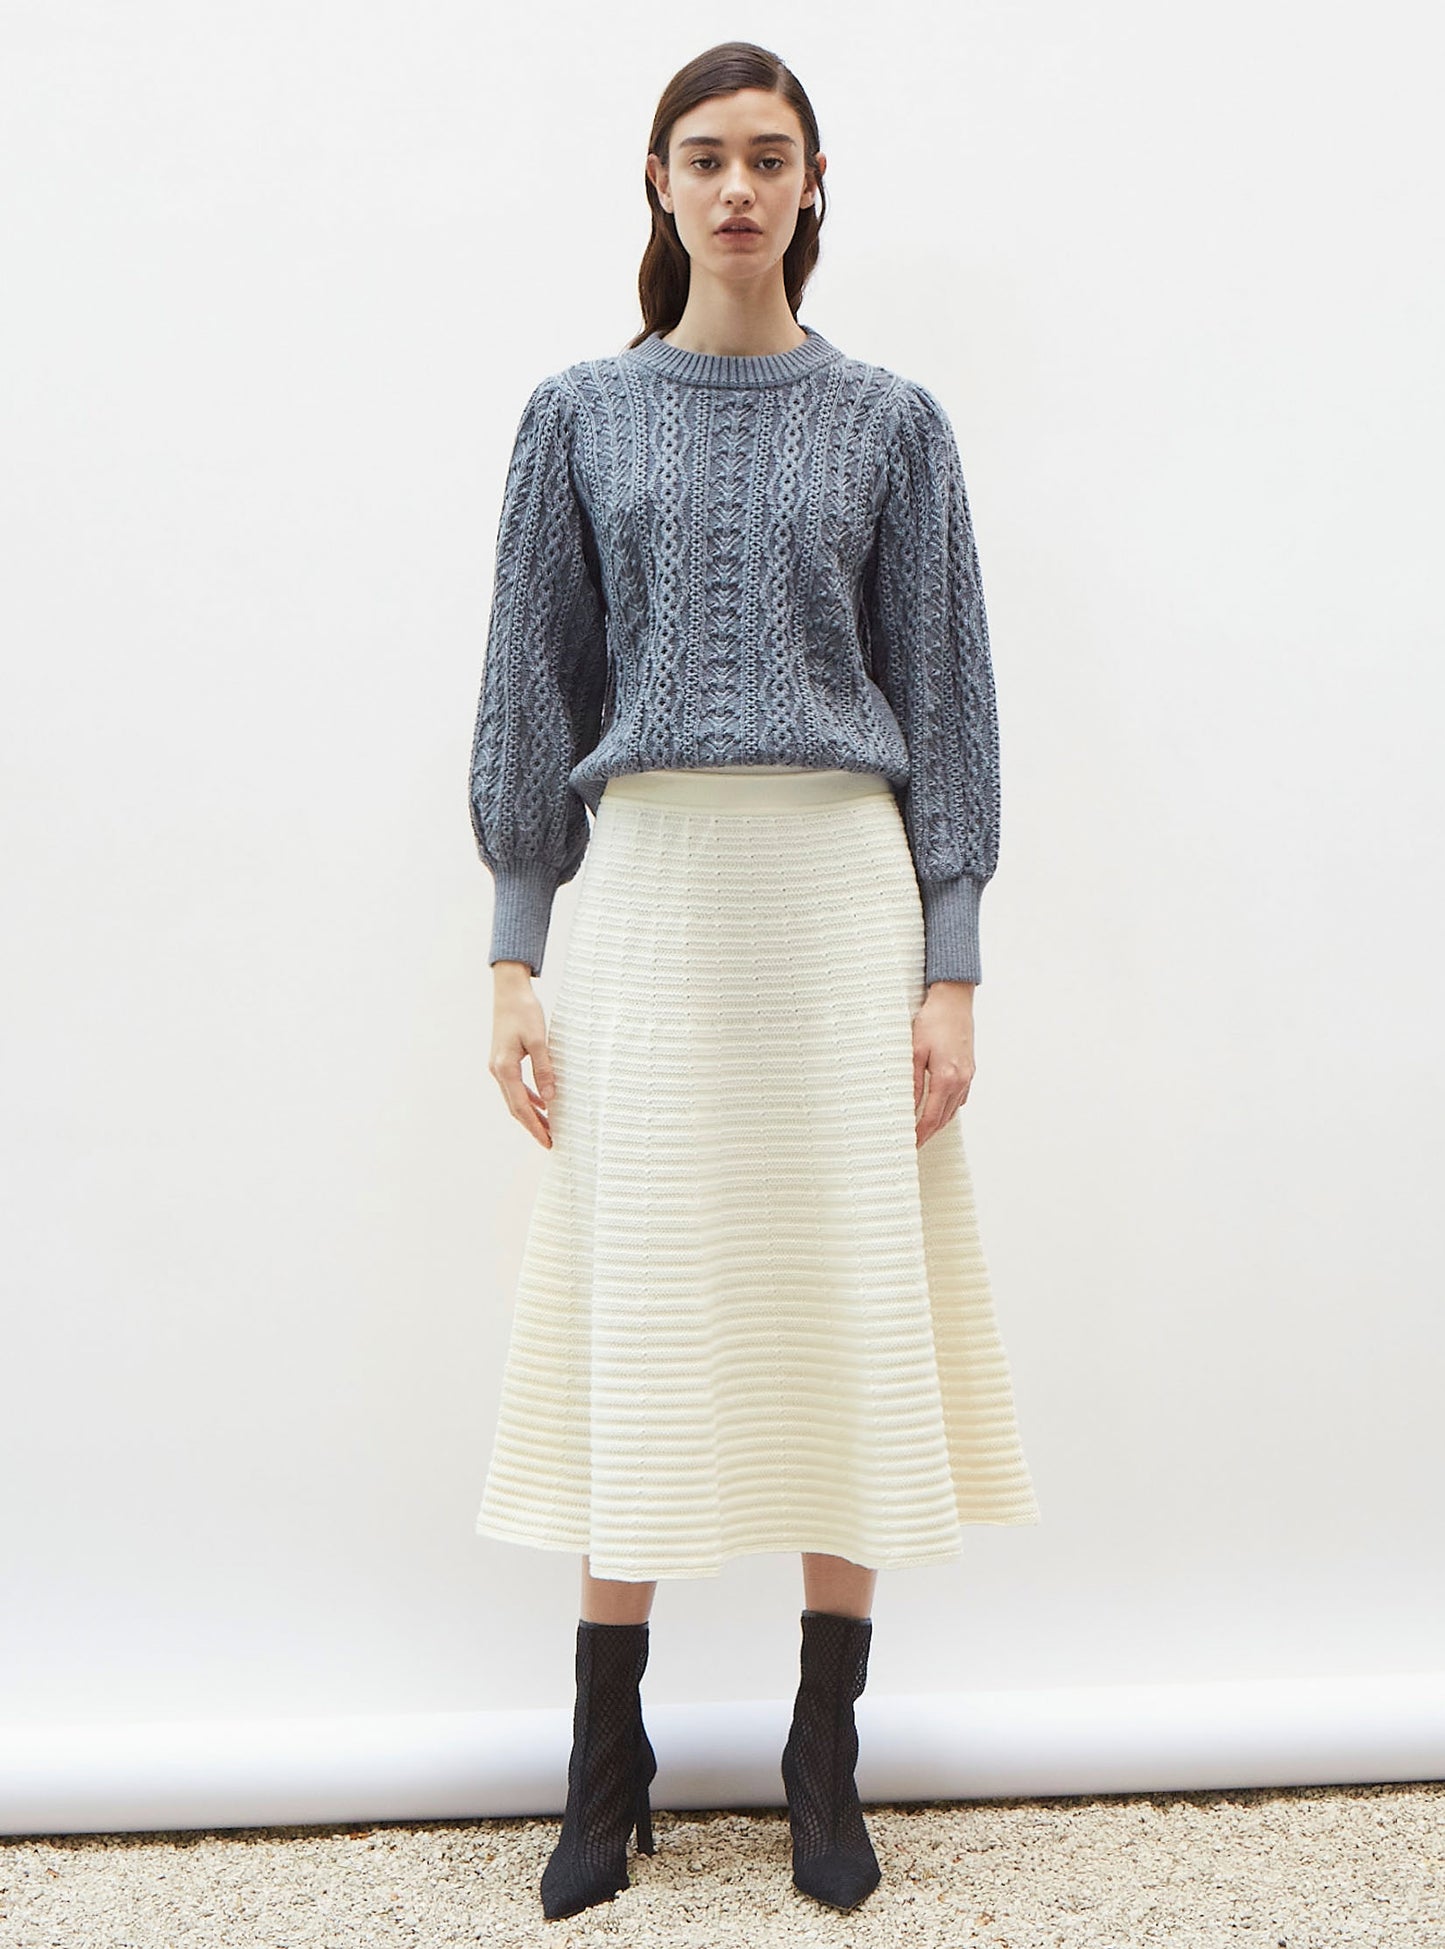 Sweater en maille irlandaise - Vêtement de luxe femme